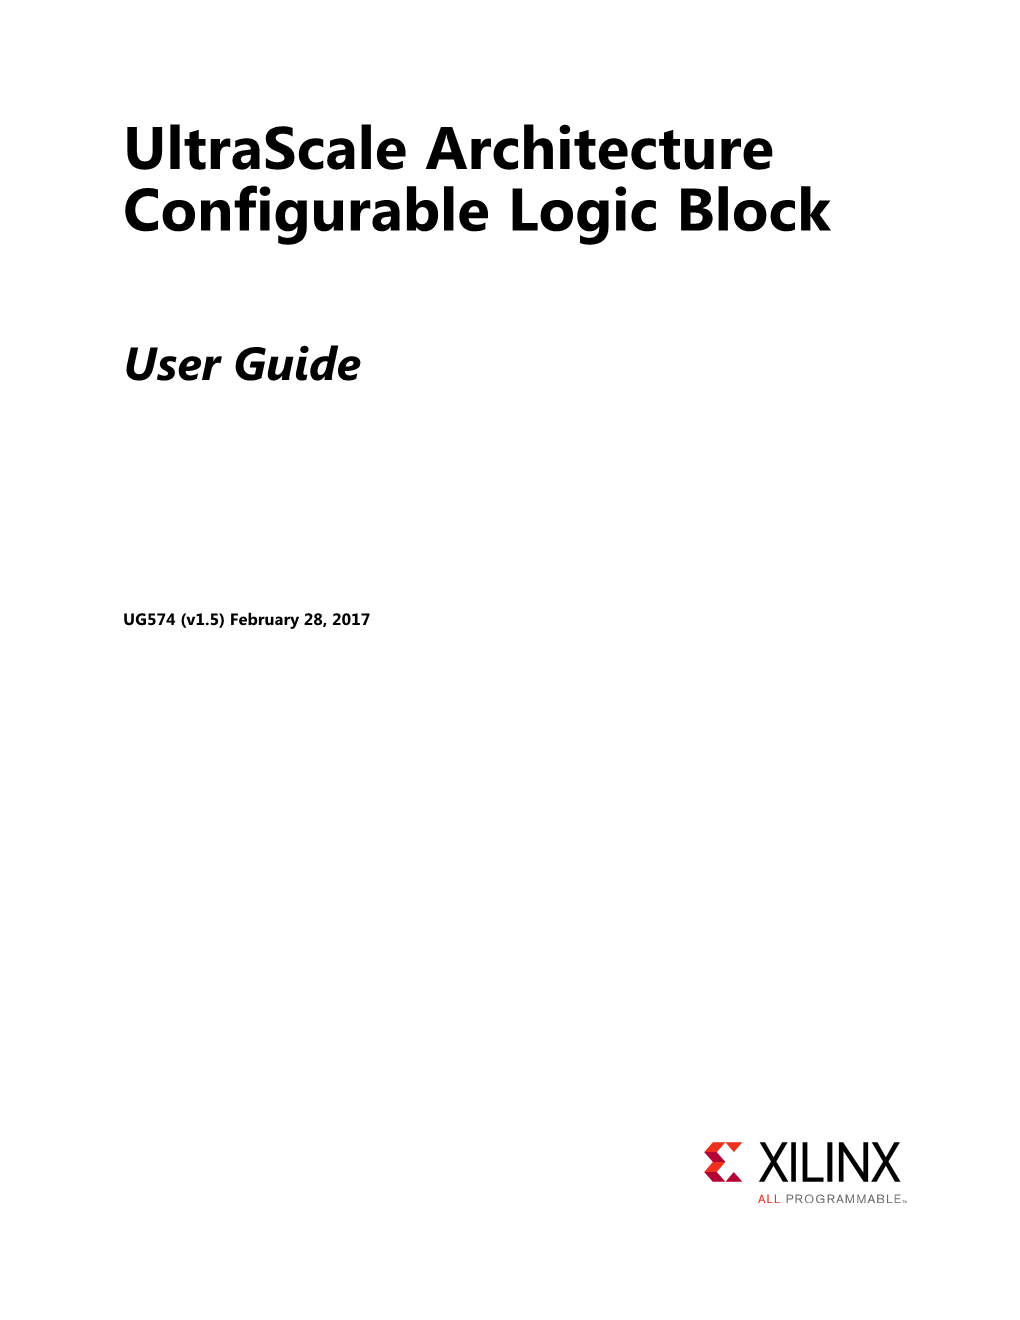 Ultrascale Architecture Configurable Logic Block User Guide (UG574)